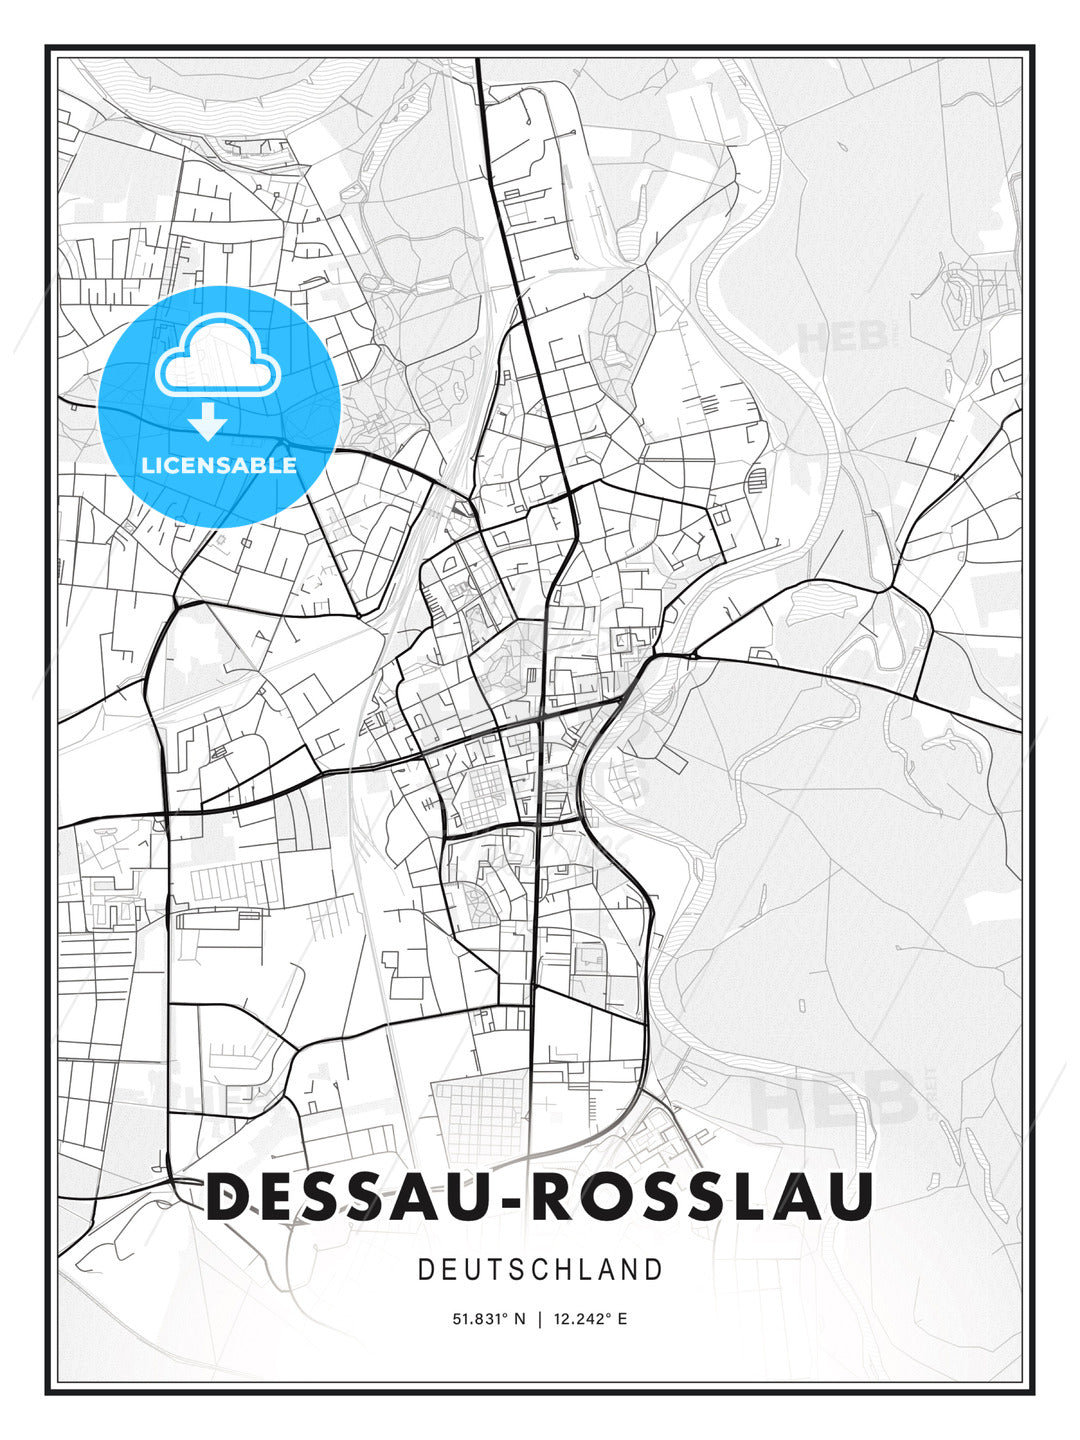 DESSAU-ROSSLAU / Dessau-Roßlau, Germany, Modern Print Template in Various Formats - HEBSTREITS Sketches